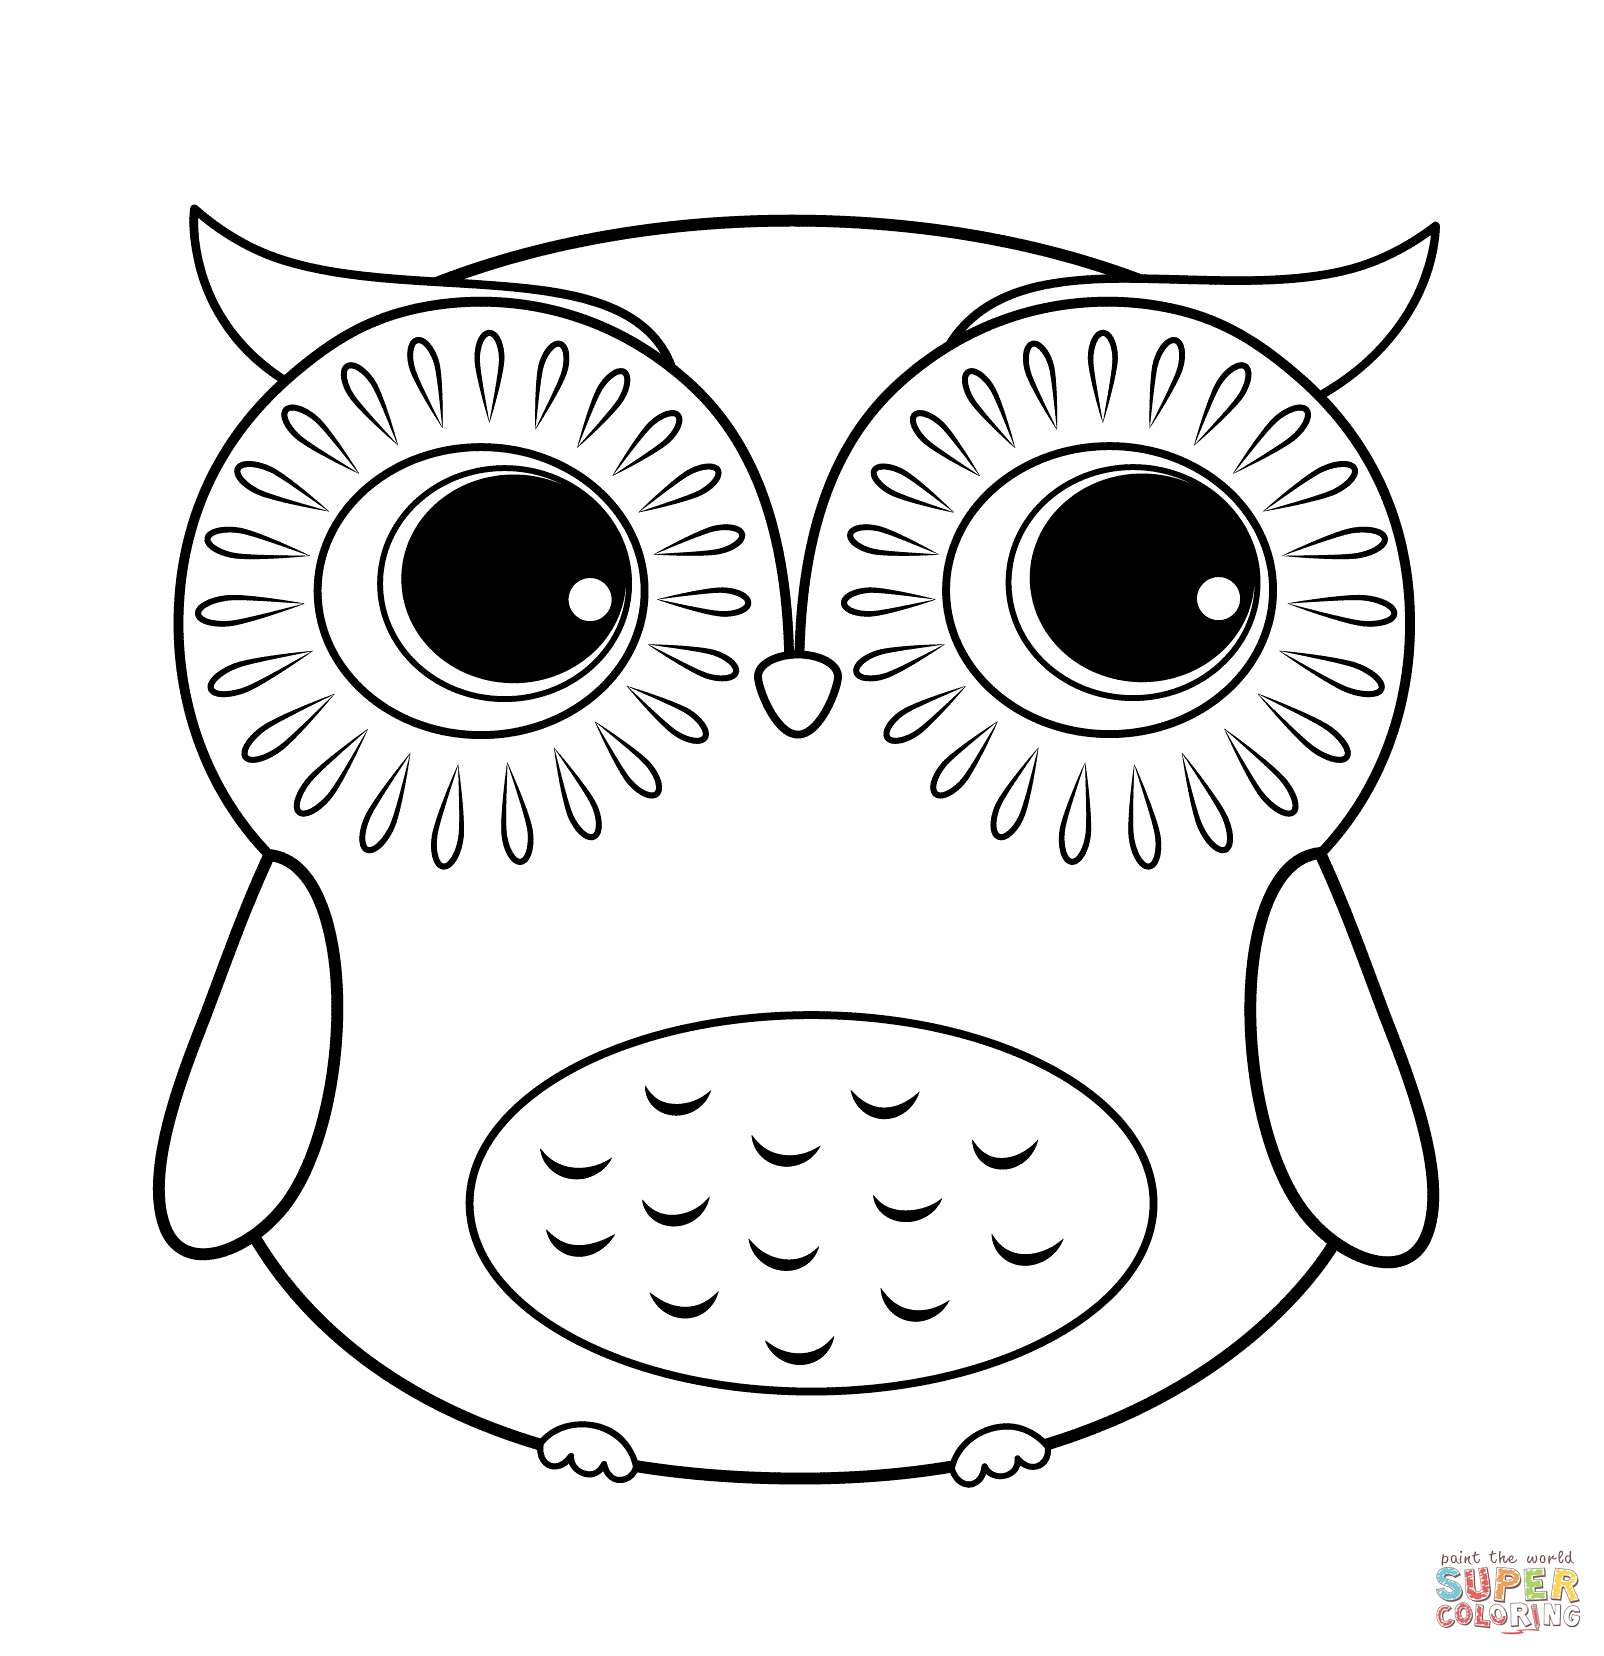 Cartoon Owl Coloring Page | Free Printable Coloring Pages - Free Printable Owl Coloring Sheets